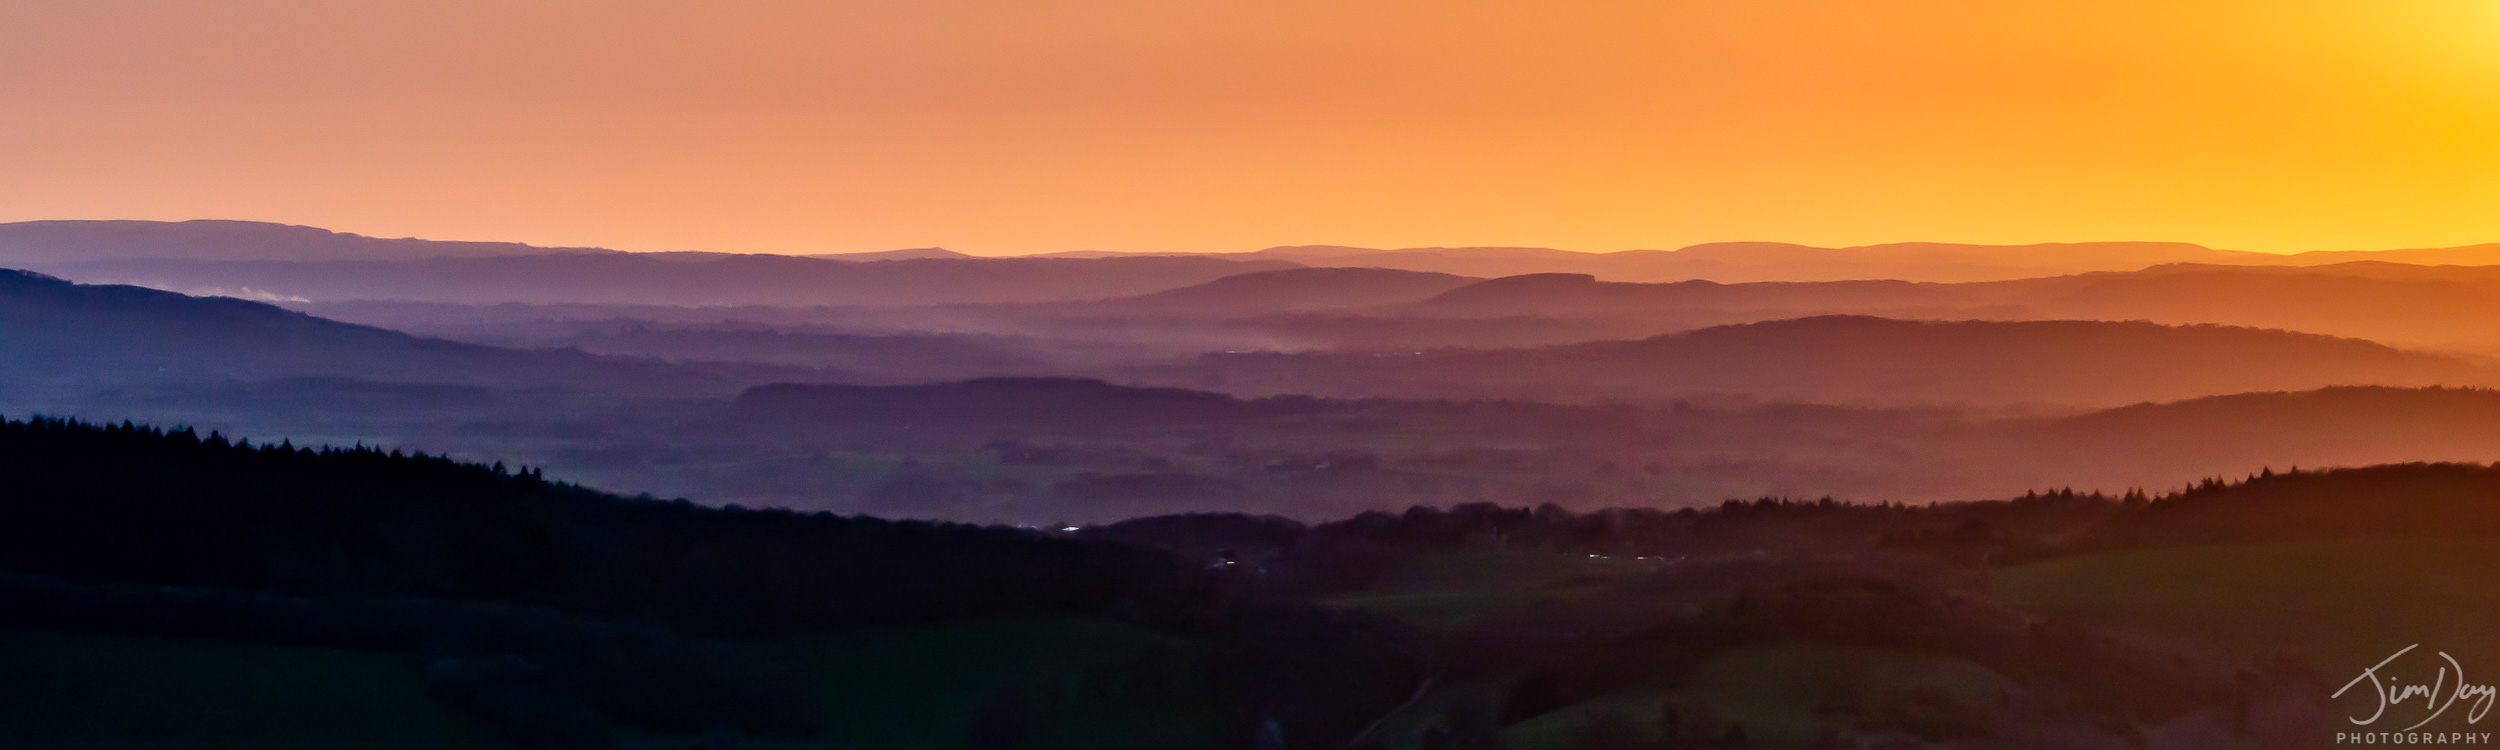 herefordshire_sunset.jpg